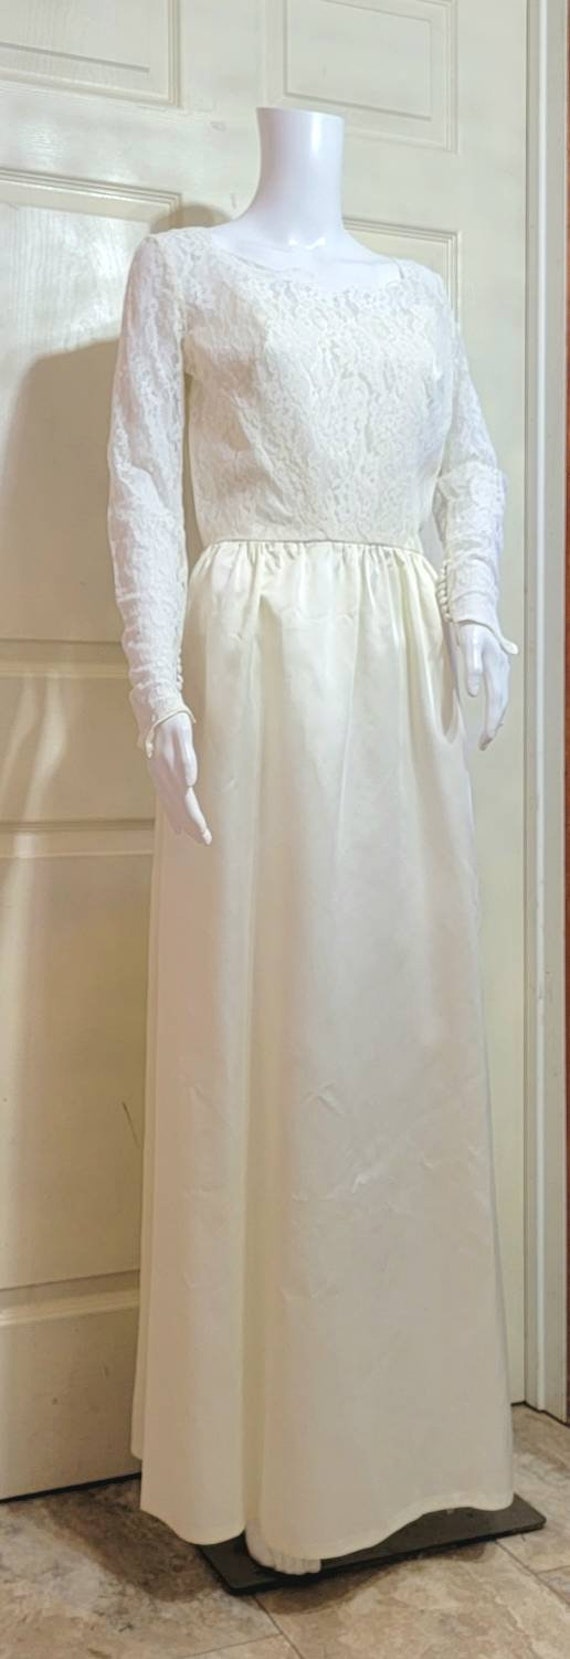 Vintage Wedding Dress - image 2